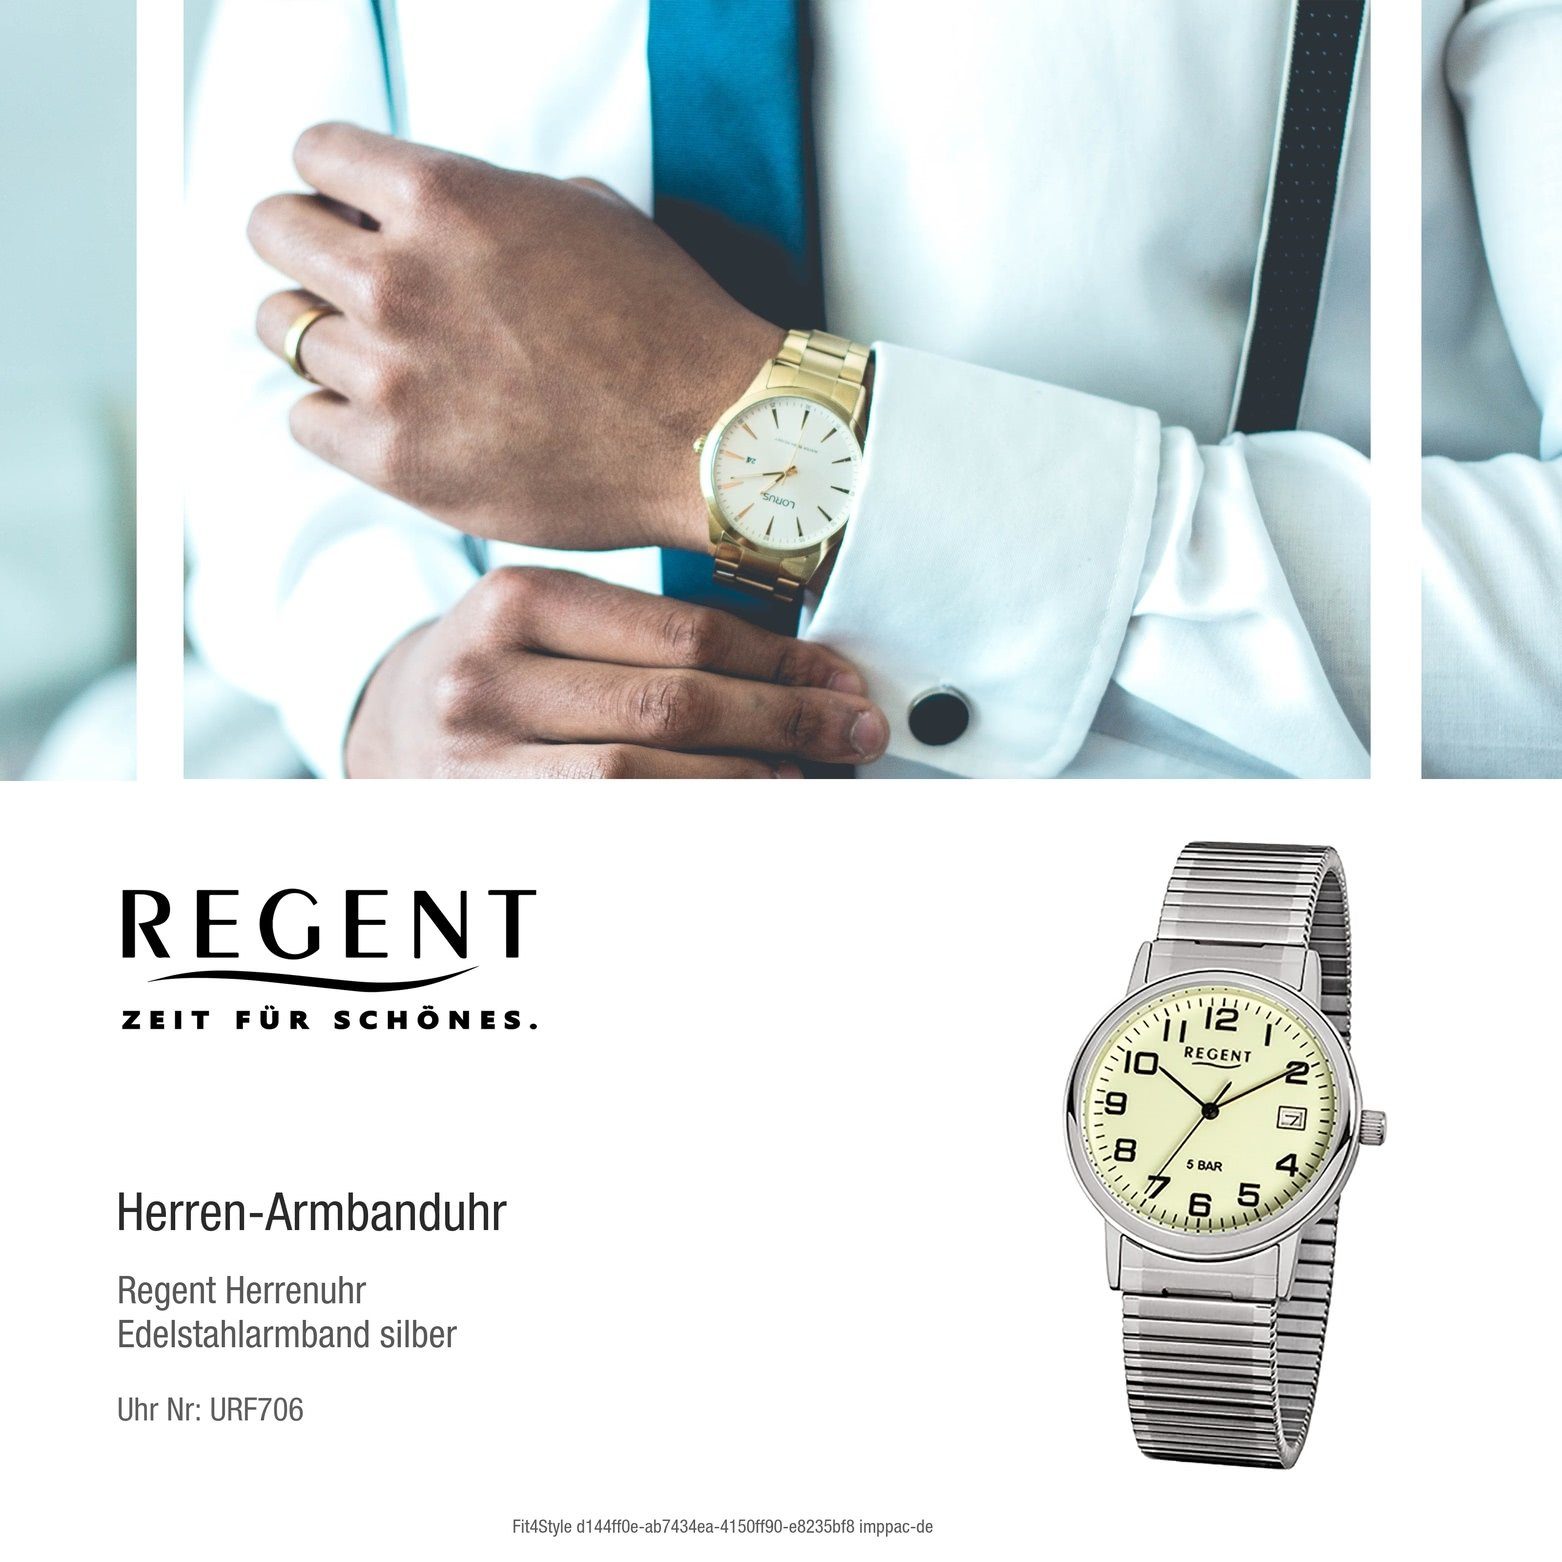 silber Armbanduhr Regent Herren (ca. mittel Analog, 35mm), Regent Edelstahlarmband rund, Herren-Armbanduhr Quarzuhr